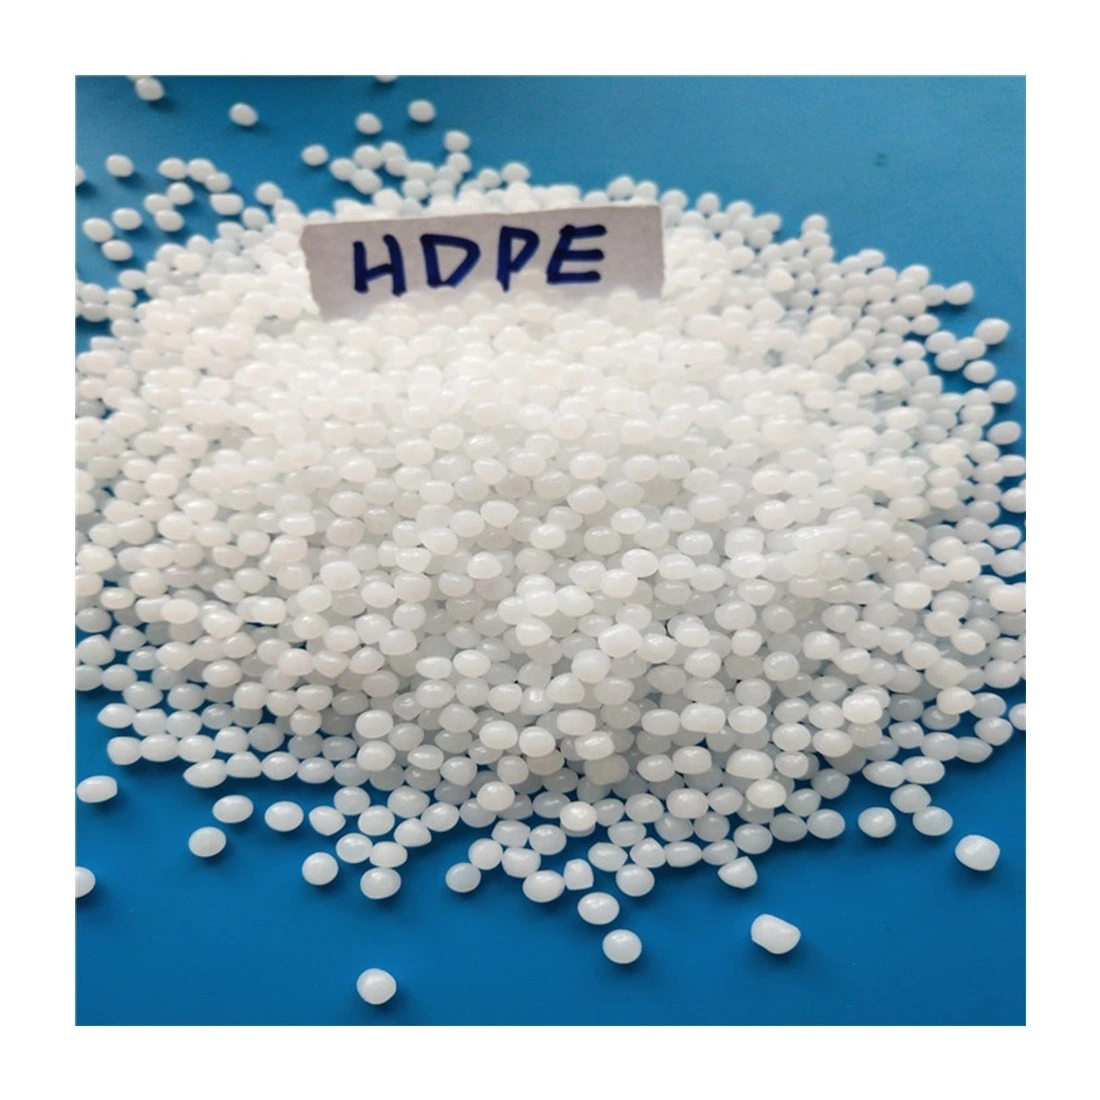 HDPE Plastic Sheet High Density Polyethylene in Stock